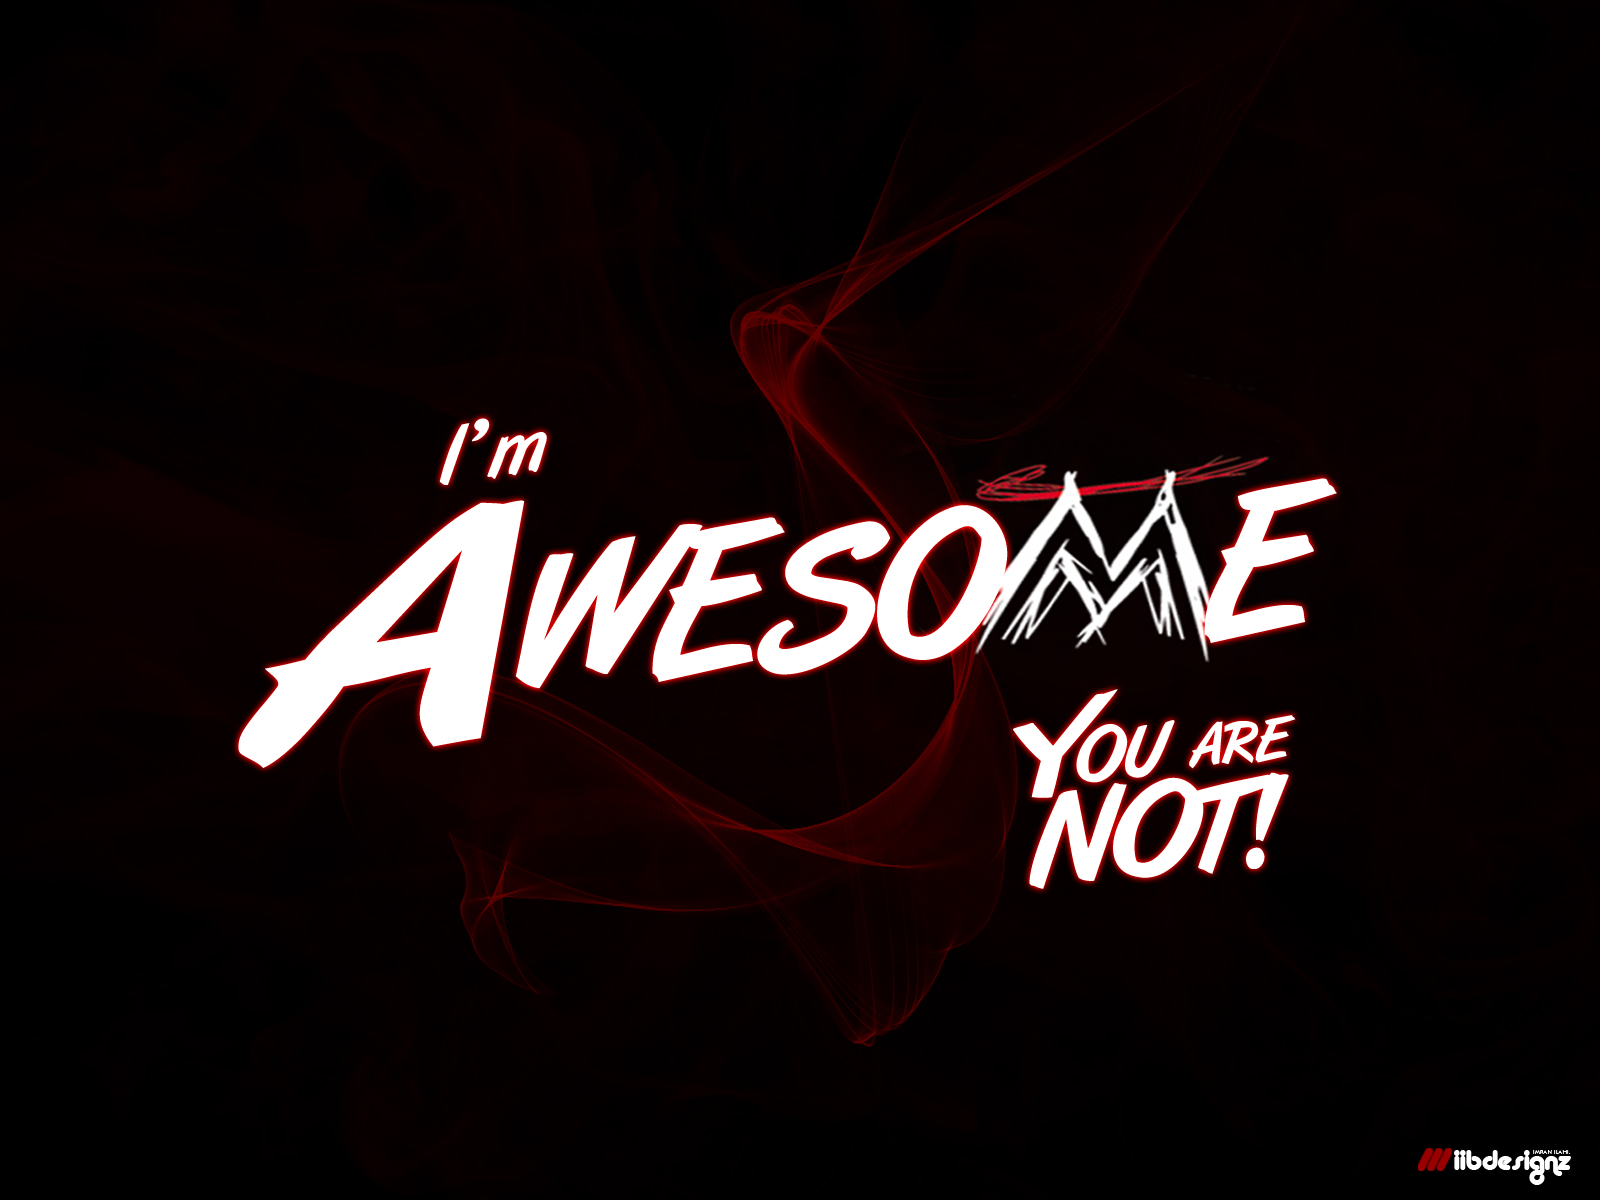 Am Awesome You Are Not Img Imgion Image Wwf I